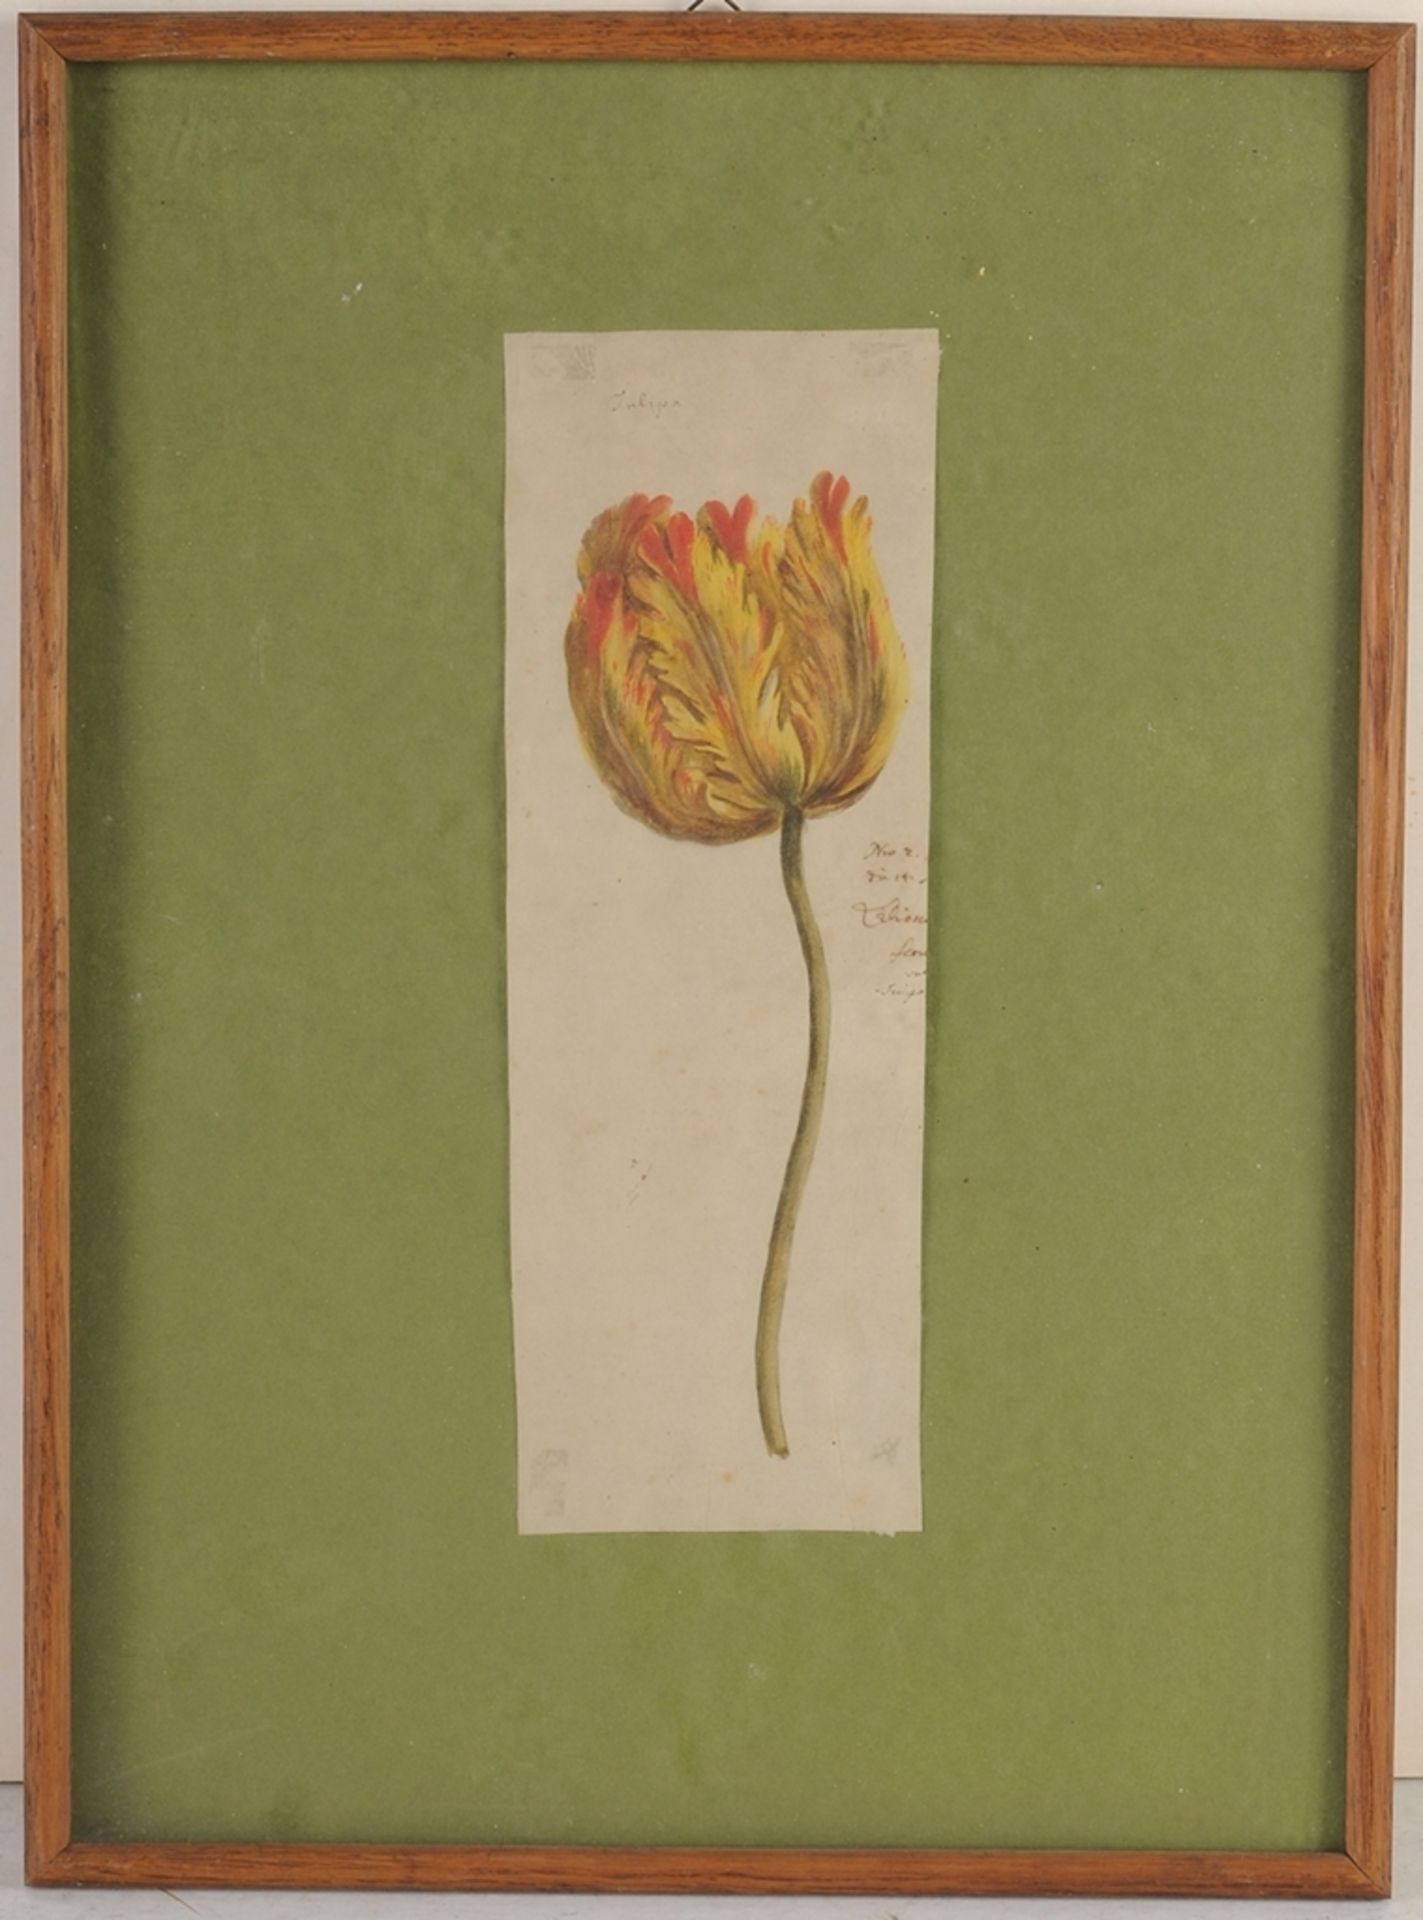 Unbekannt(Deutscher Maler, 19. Jh.) Tusche, Aquarell/ Papier. "Tulipia". L. braunfleckig, par